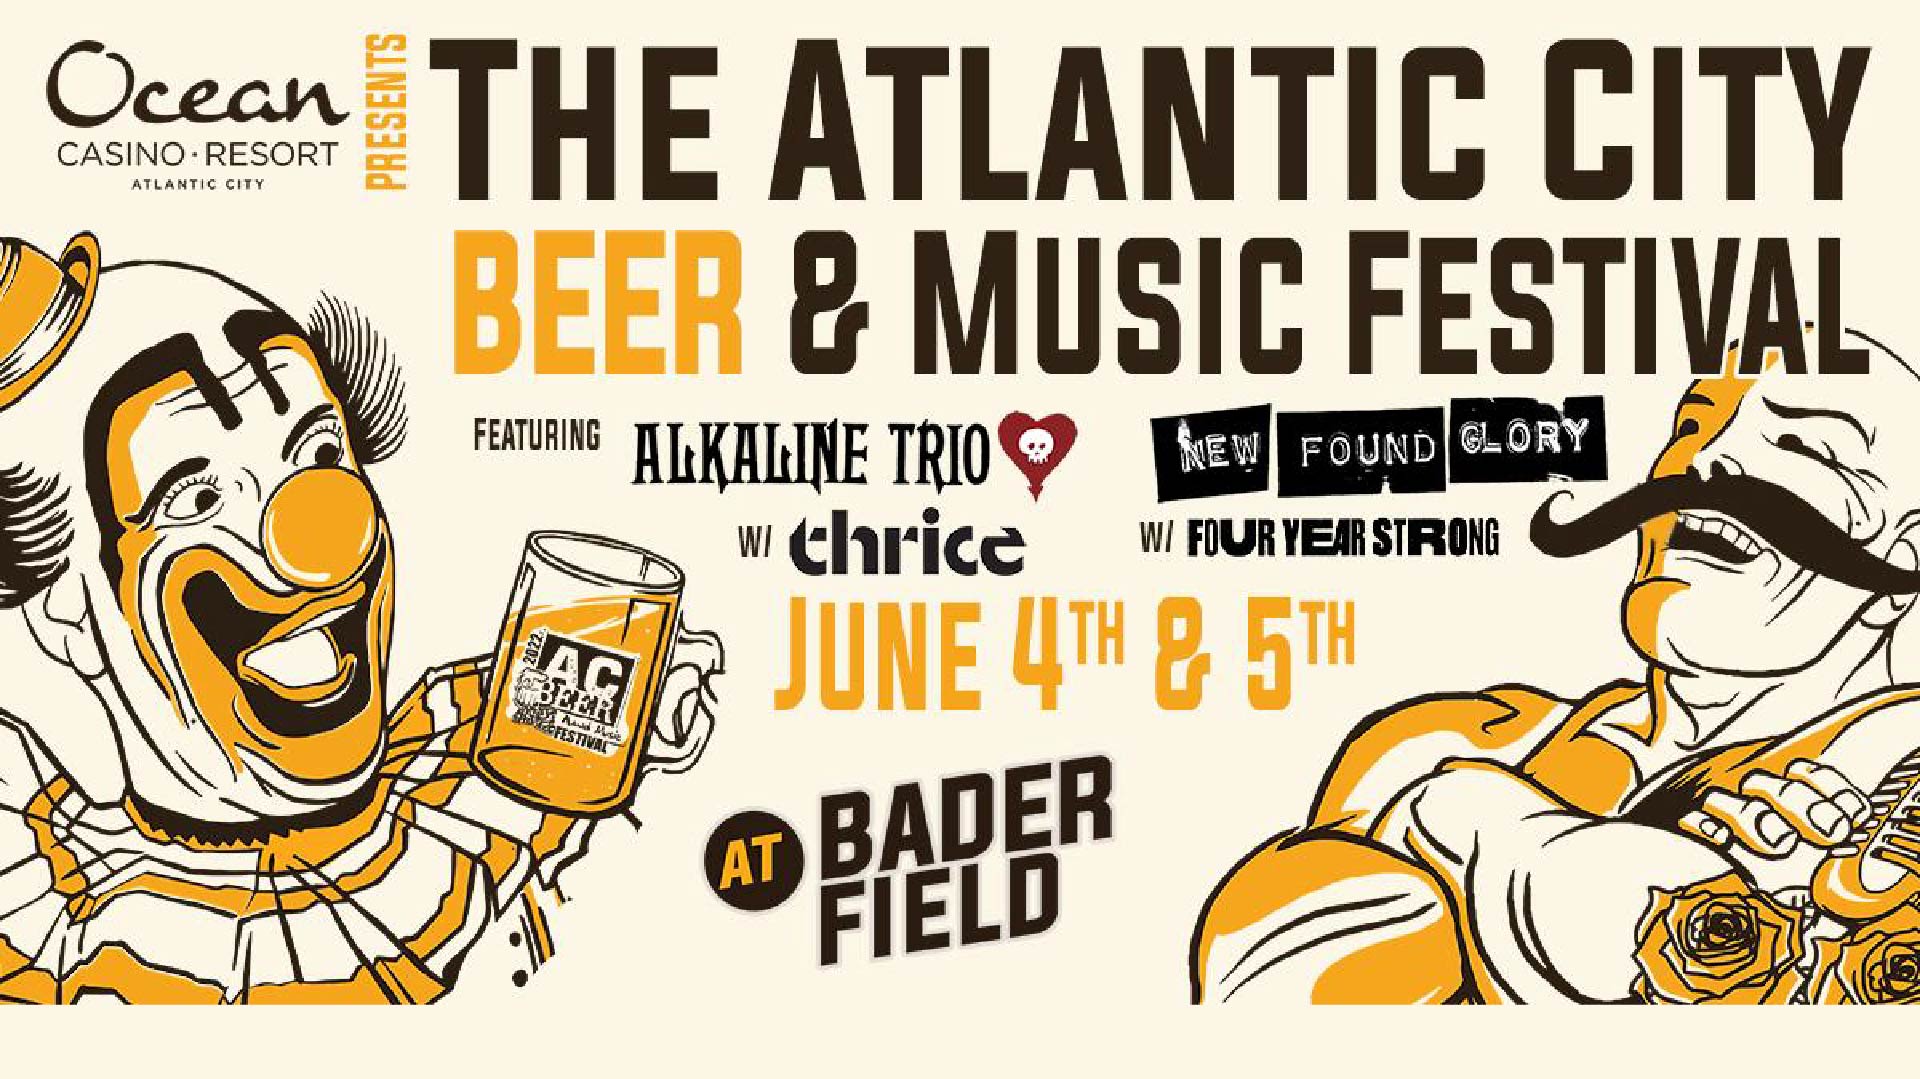 Atlantic City Beer & Music Festival June 4th & 5th